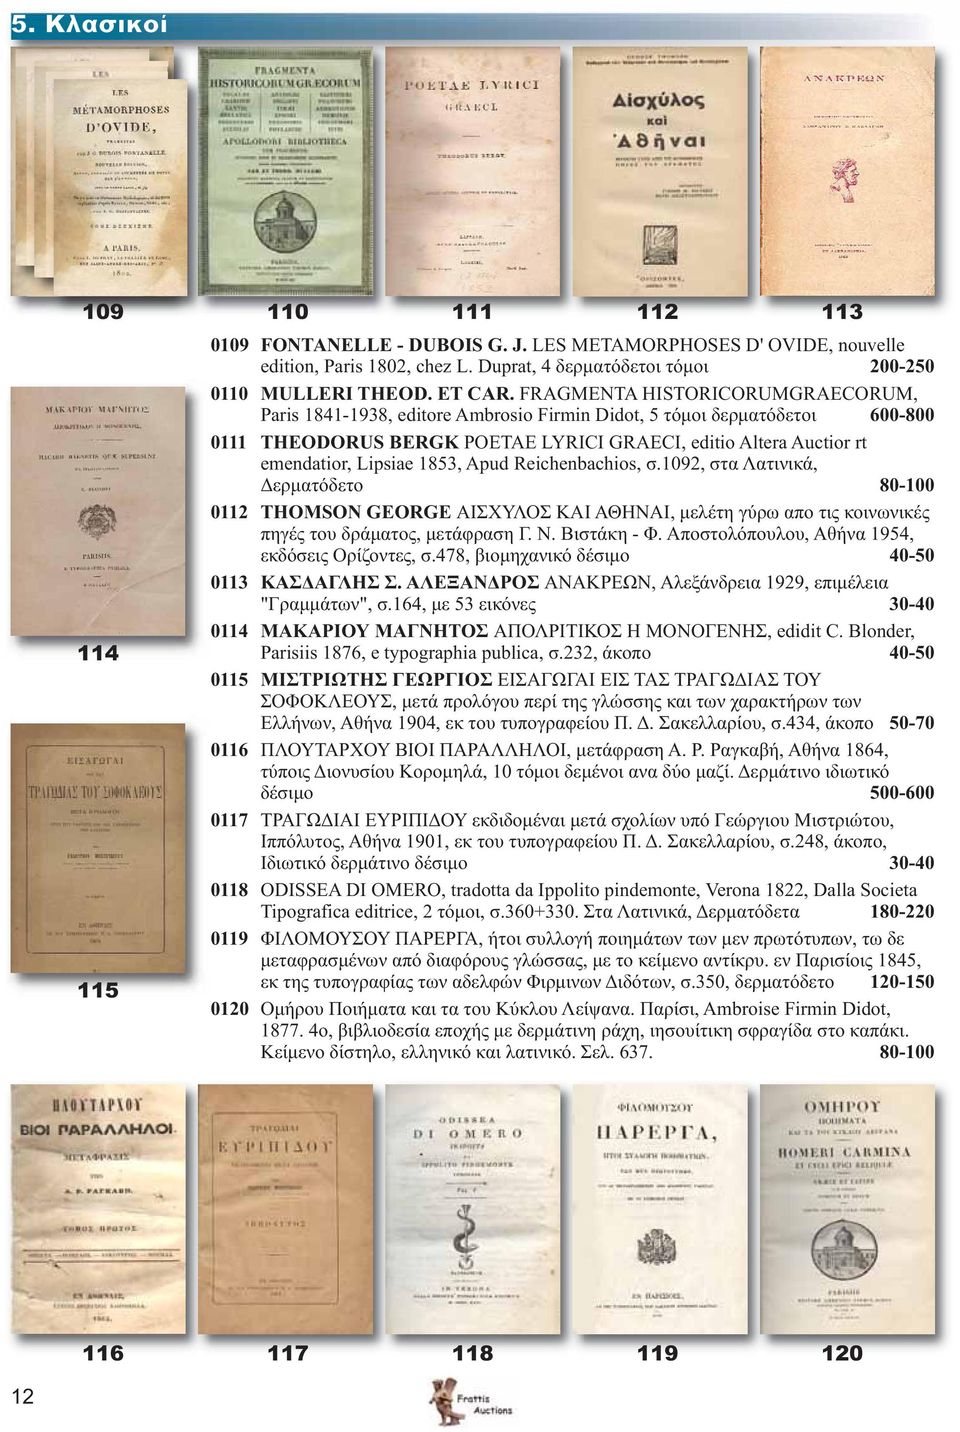 FRAGMENTA HISTORICORUMGRAECORUM, Paris 1841-1938, editore Ambrosio Firmin Didot, 5 τόμοι δερματόδετοι 600-800 0111 THEODORUS BERGK POETAE LYRICI GRAECI, editio Altera Auctior rt emendatior, Lipsiae